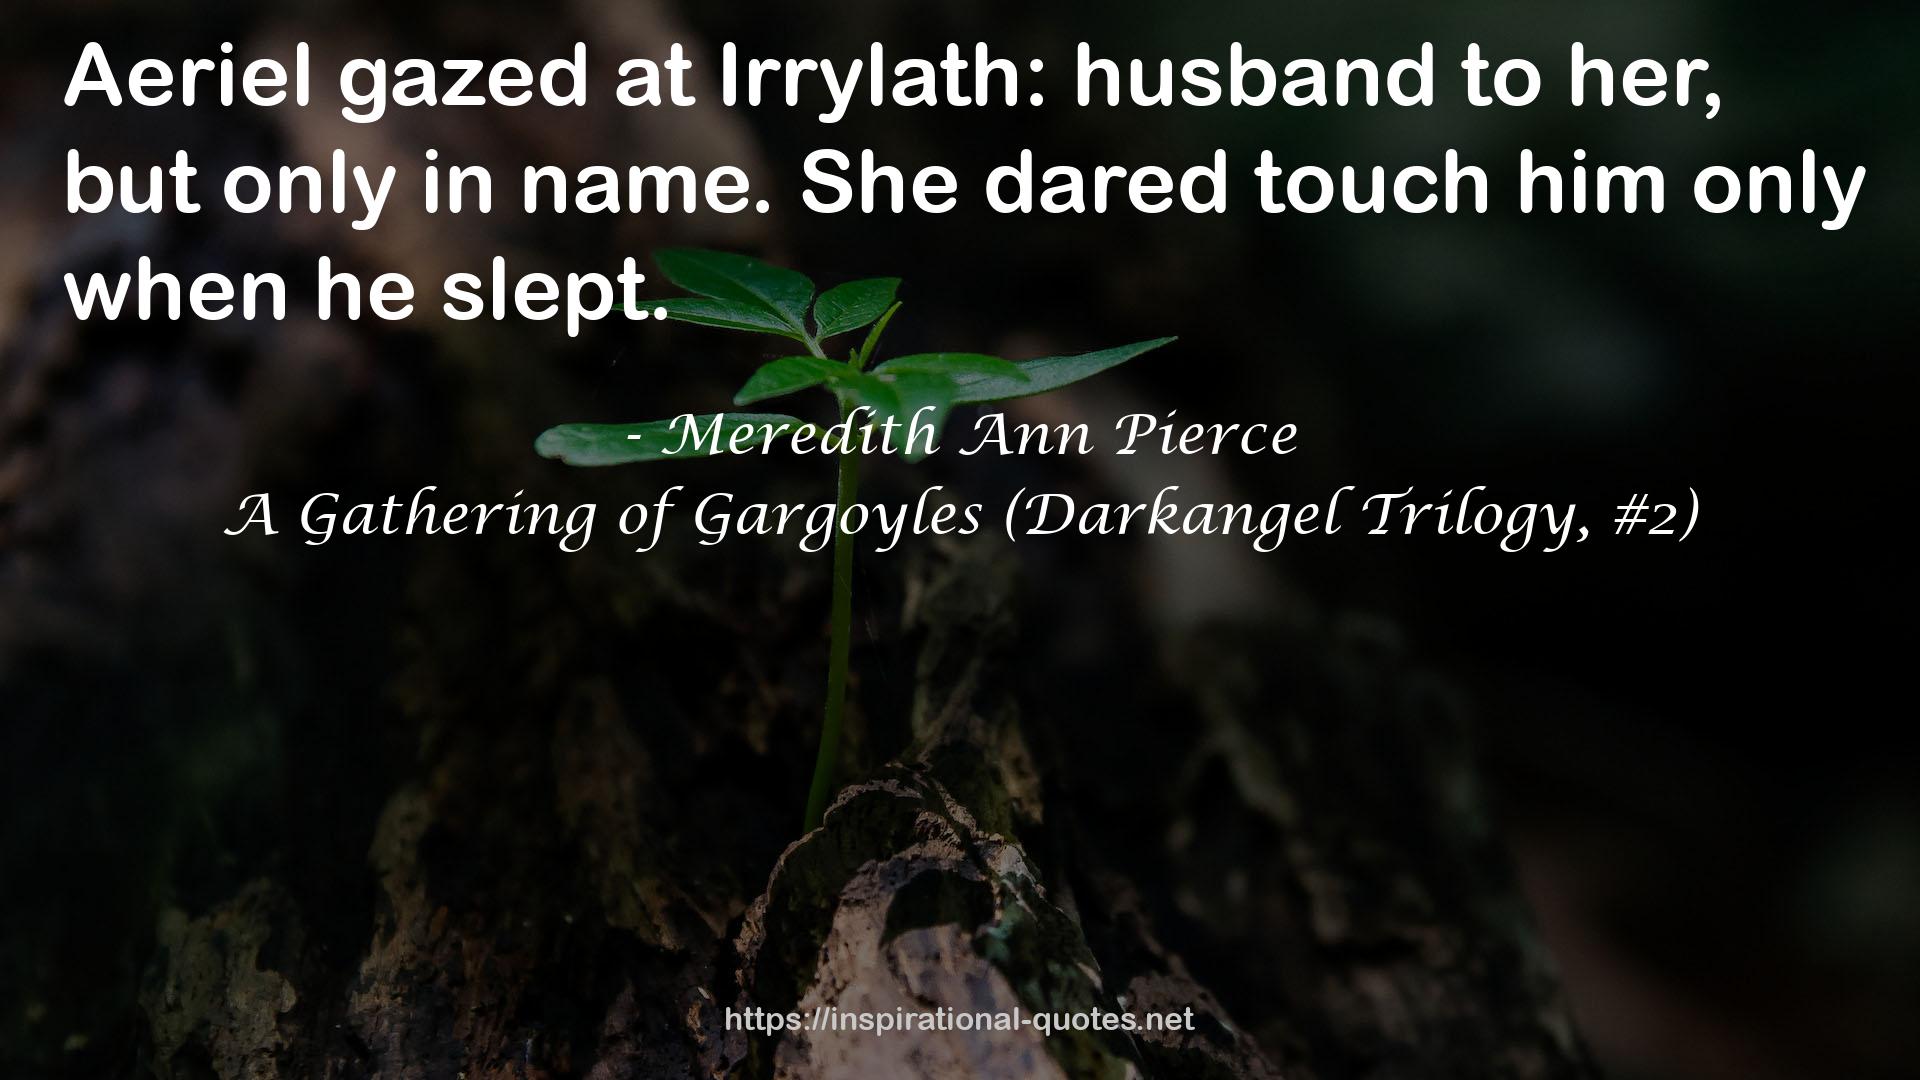 A Gathering of Gargoyles (Darkangel Trilogy, #2) QUOTES